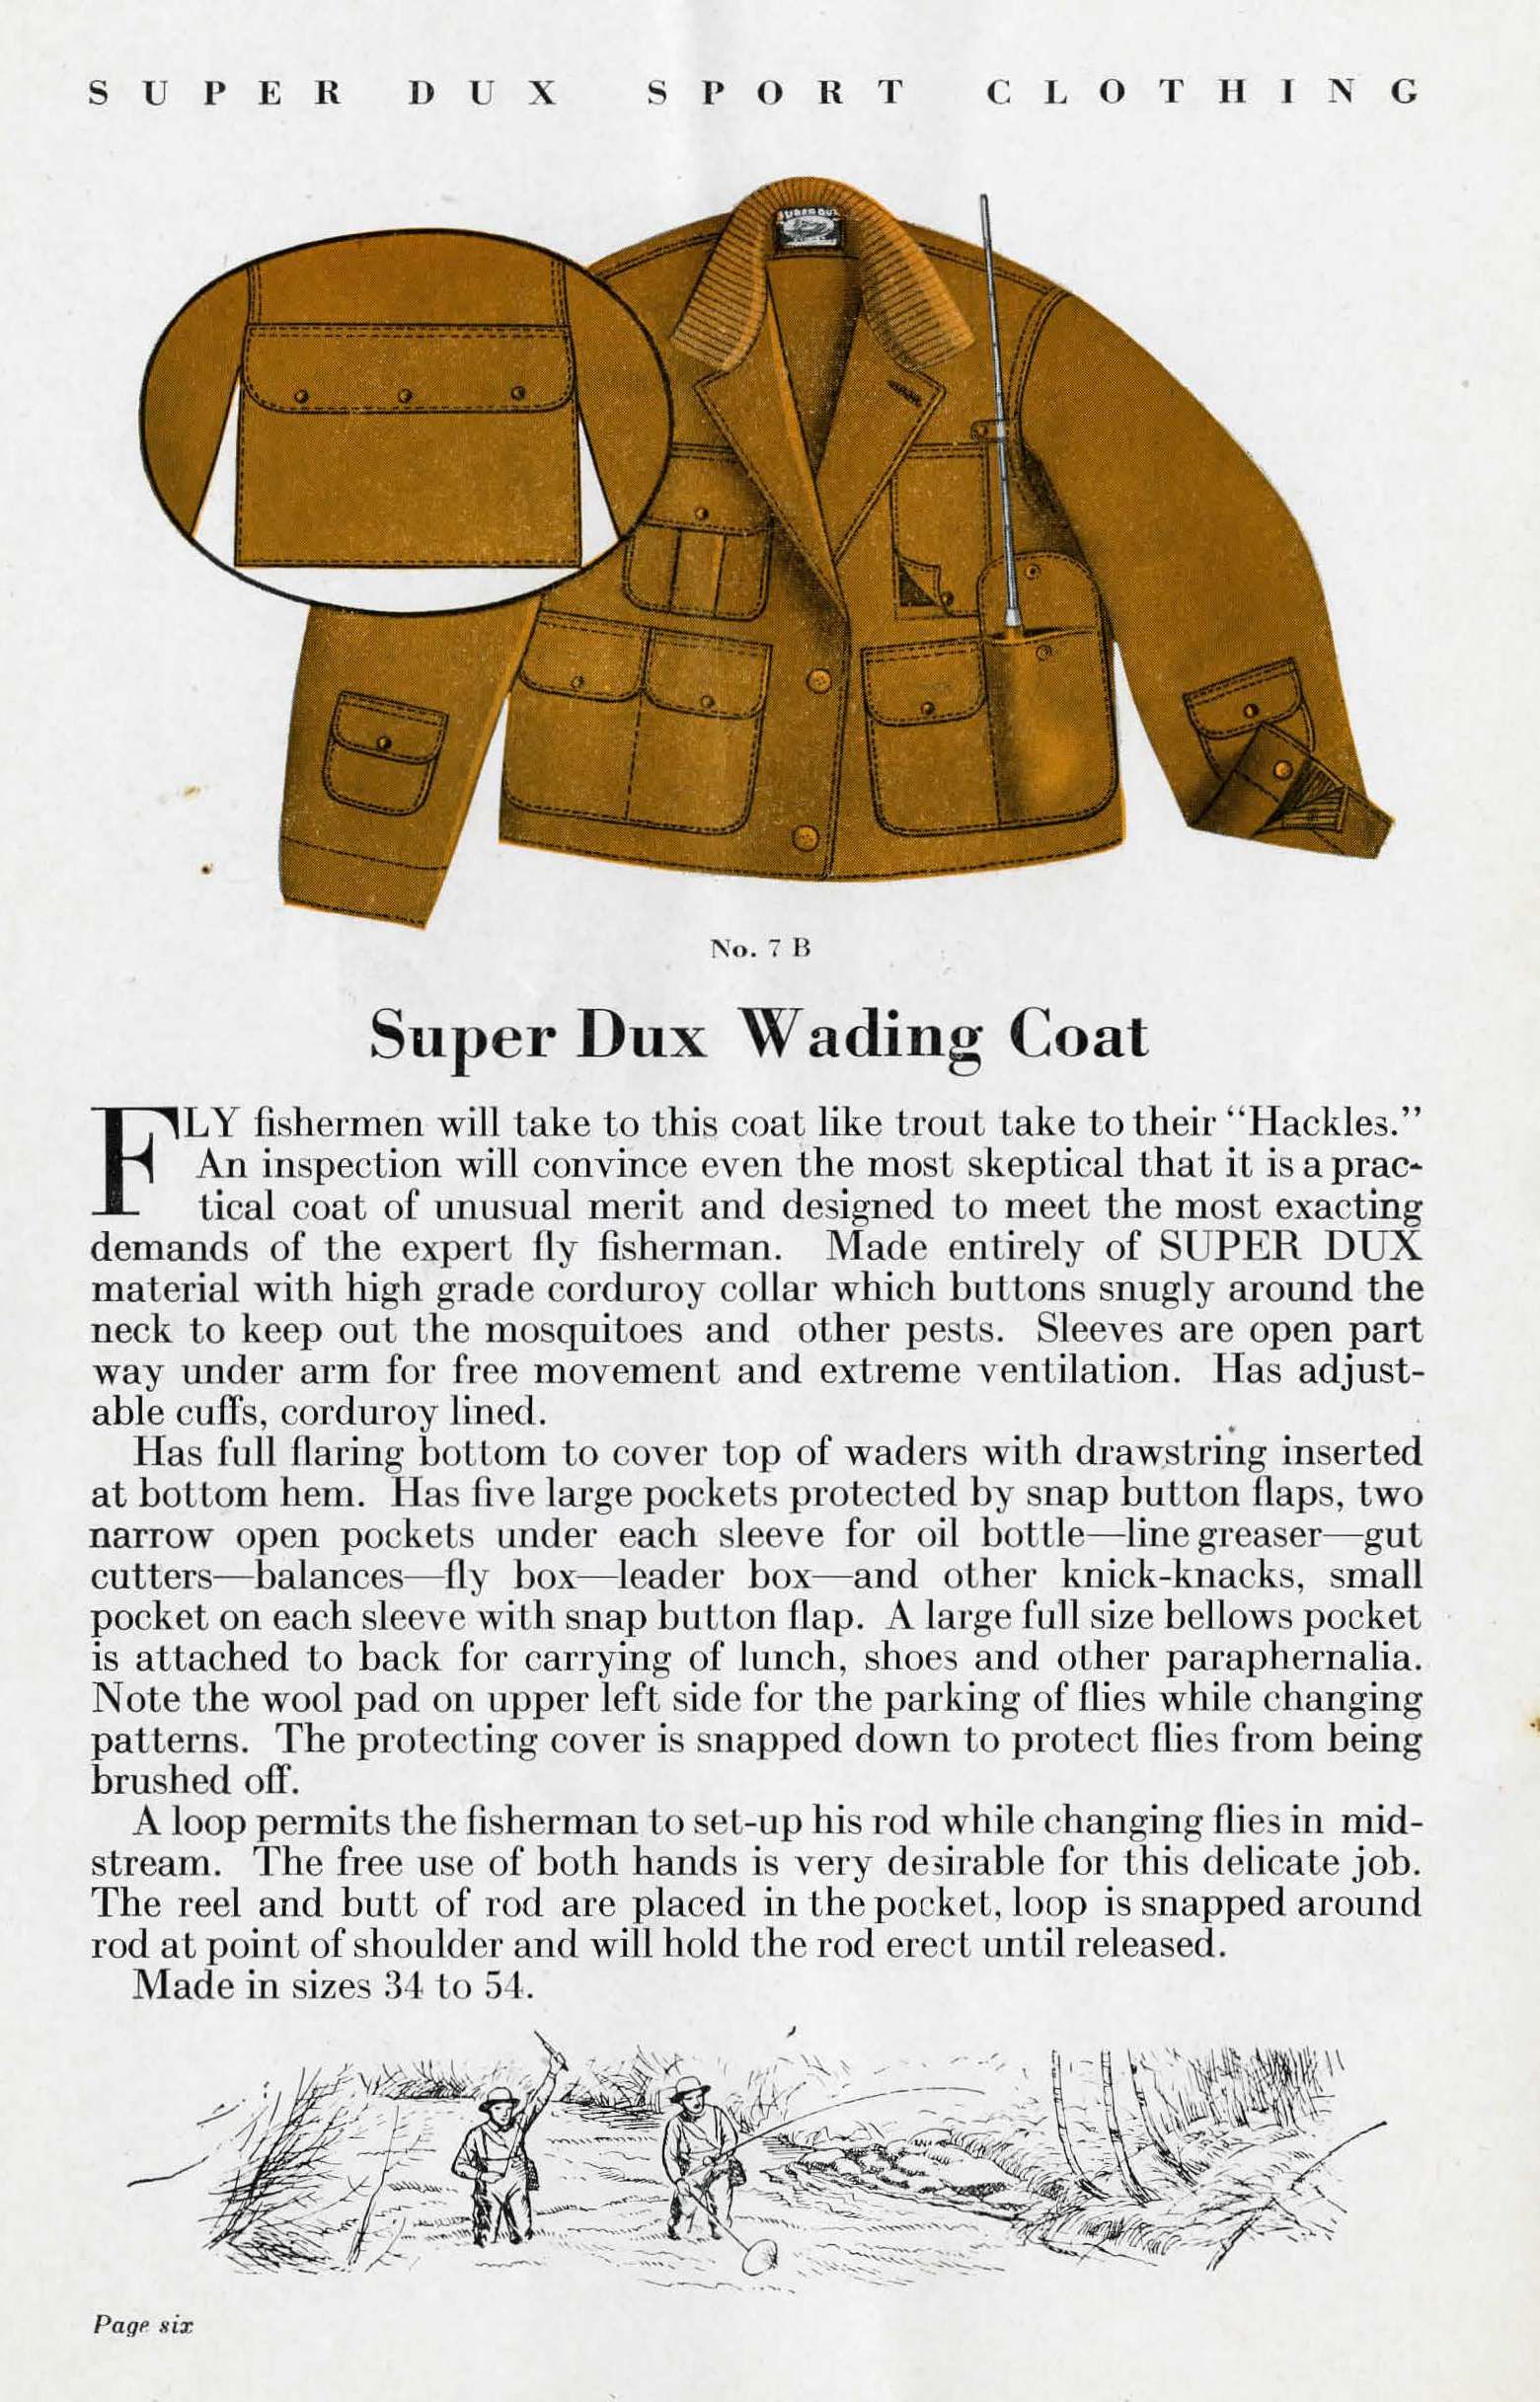 <b>1930-1932:</b> The Super Dux Wading Coat is âdesigned to meet the most exacting demands of the expert fly fisherman.â
